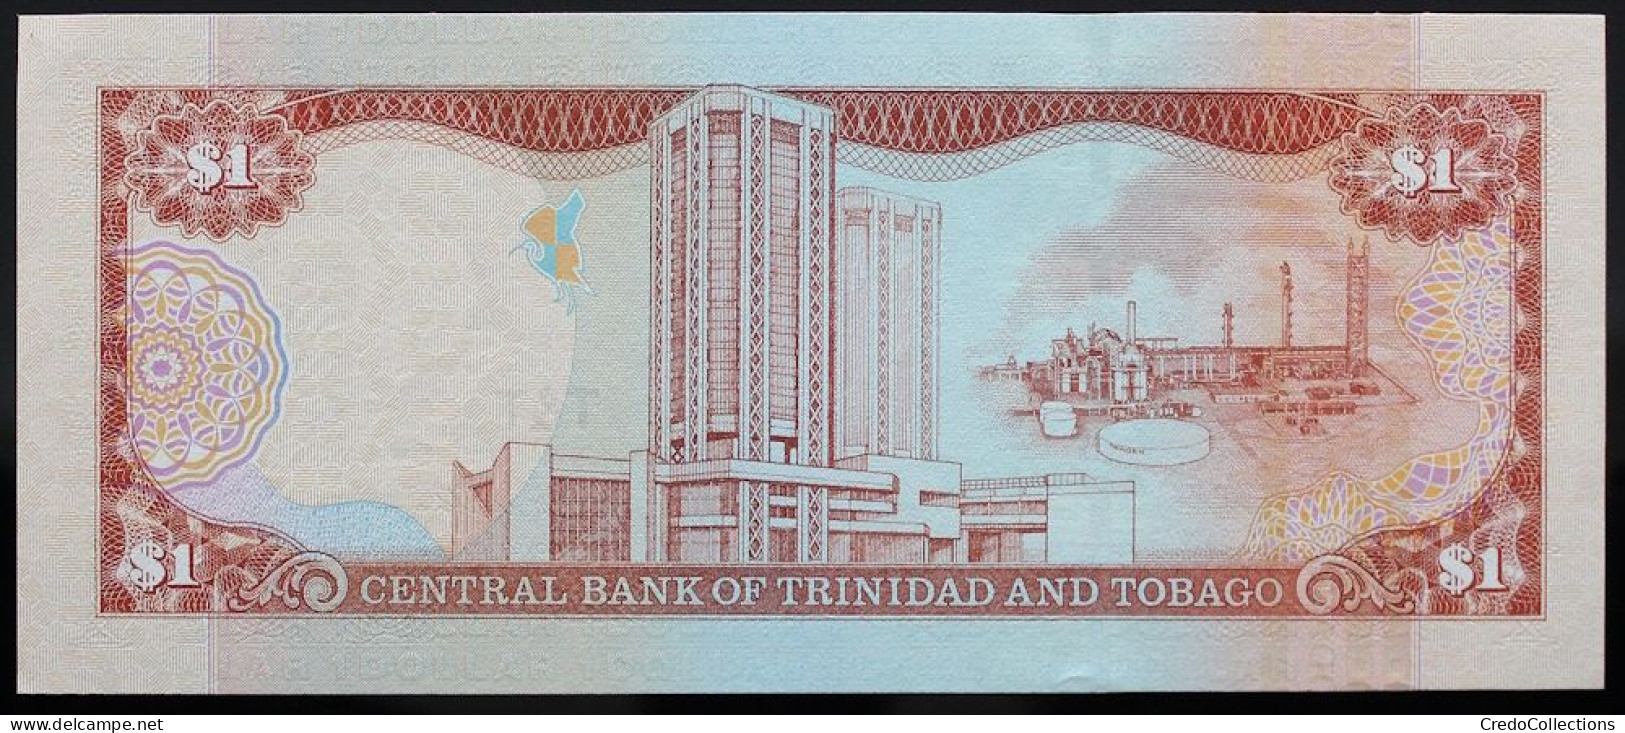 Trinitad Et Tobago - 1 Dollar - 2002 - PICK 41 - NEUF - Trinidad & Tobago